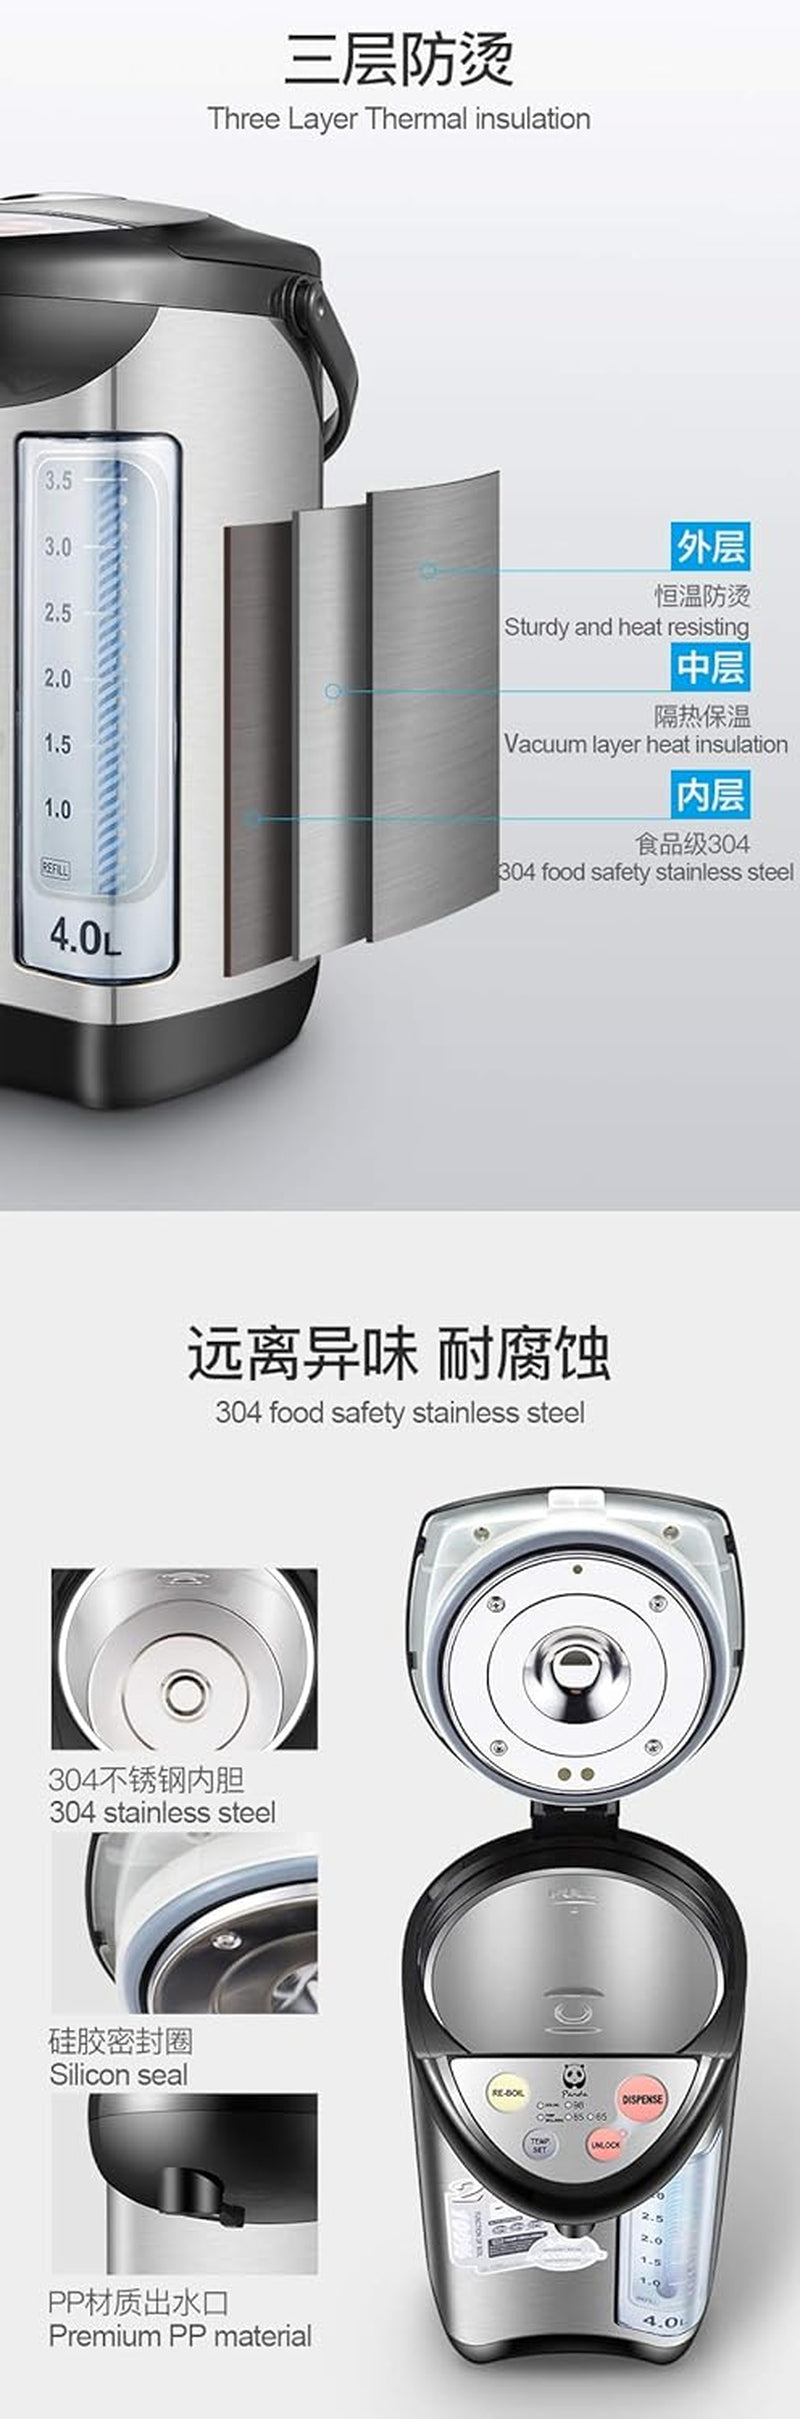 Panda Electric Hot Water Boiler and Warmer, Hot Water Dispenser, 304 Stainless Steel Interior (Stainlee Steel/Brown, 3.3 Liter)